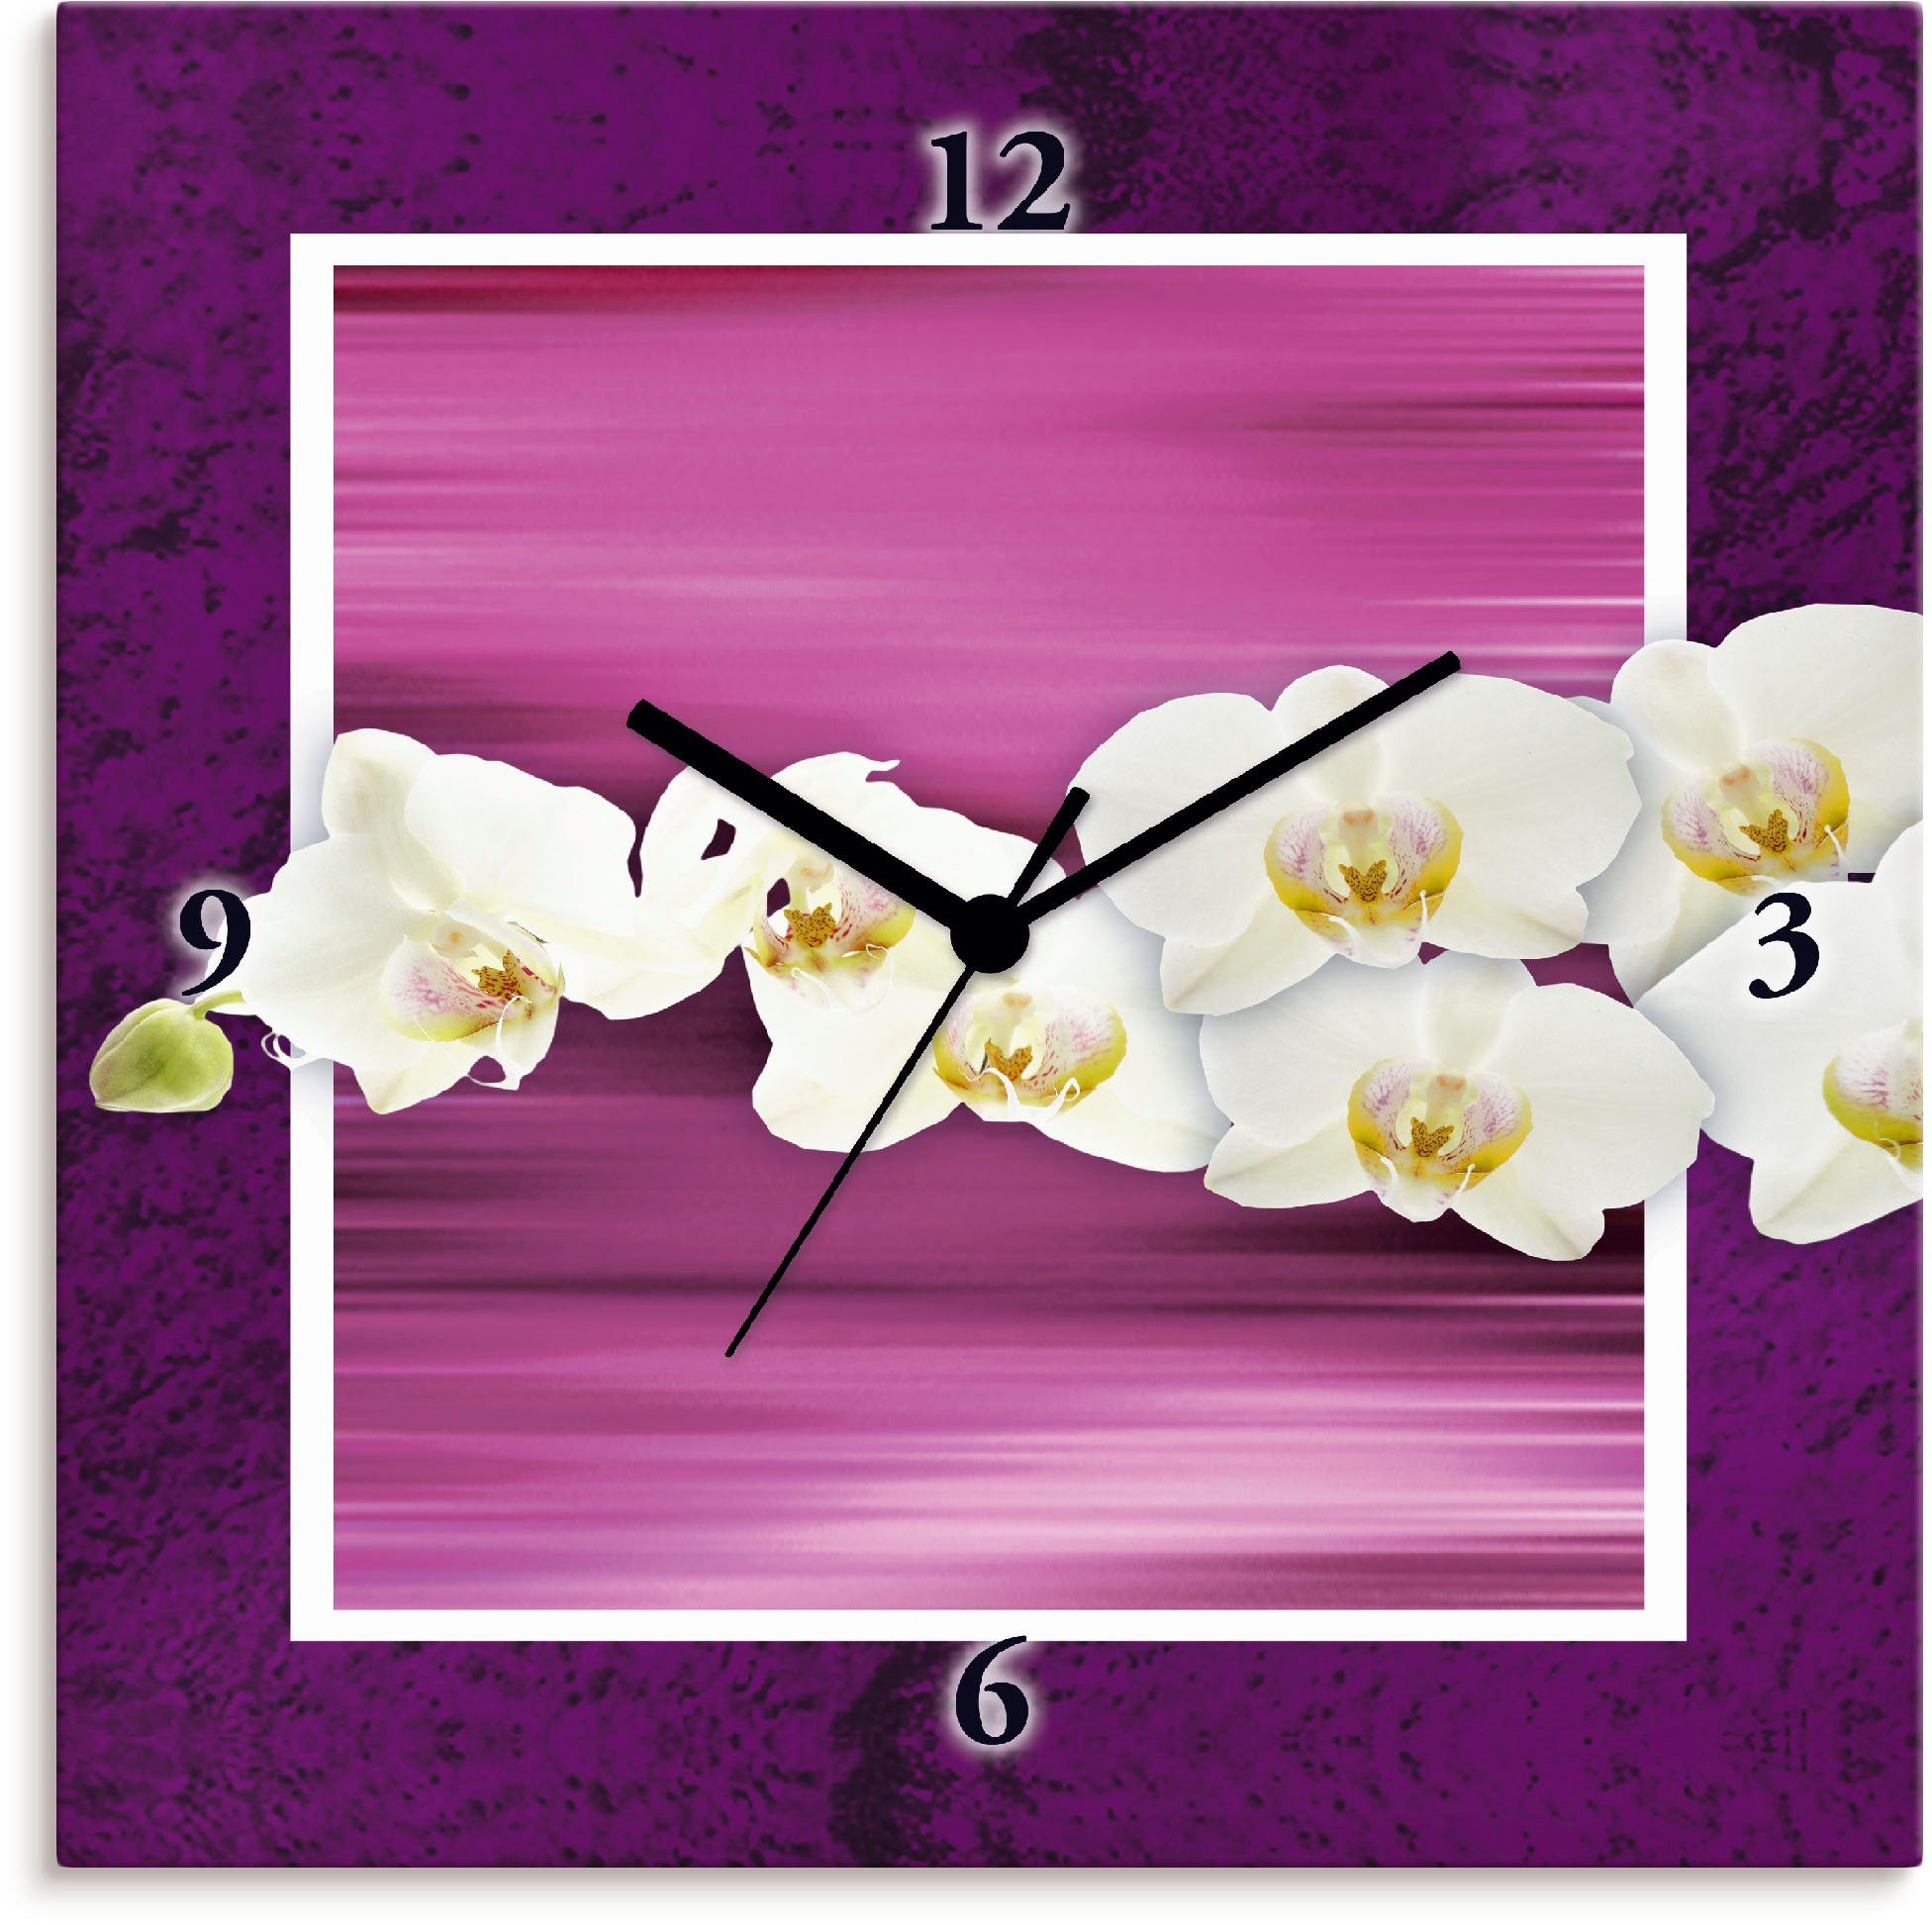 Artland (wahlweise violett Tickgeräusche) Wanduhr lautlos ohne Orchideen Quarz- oder Funkuhrwerk, mit -